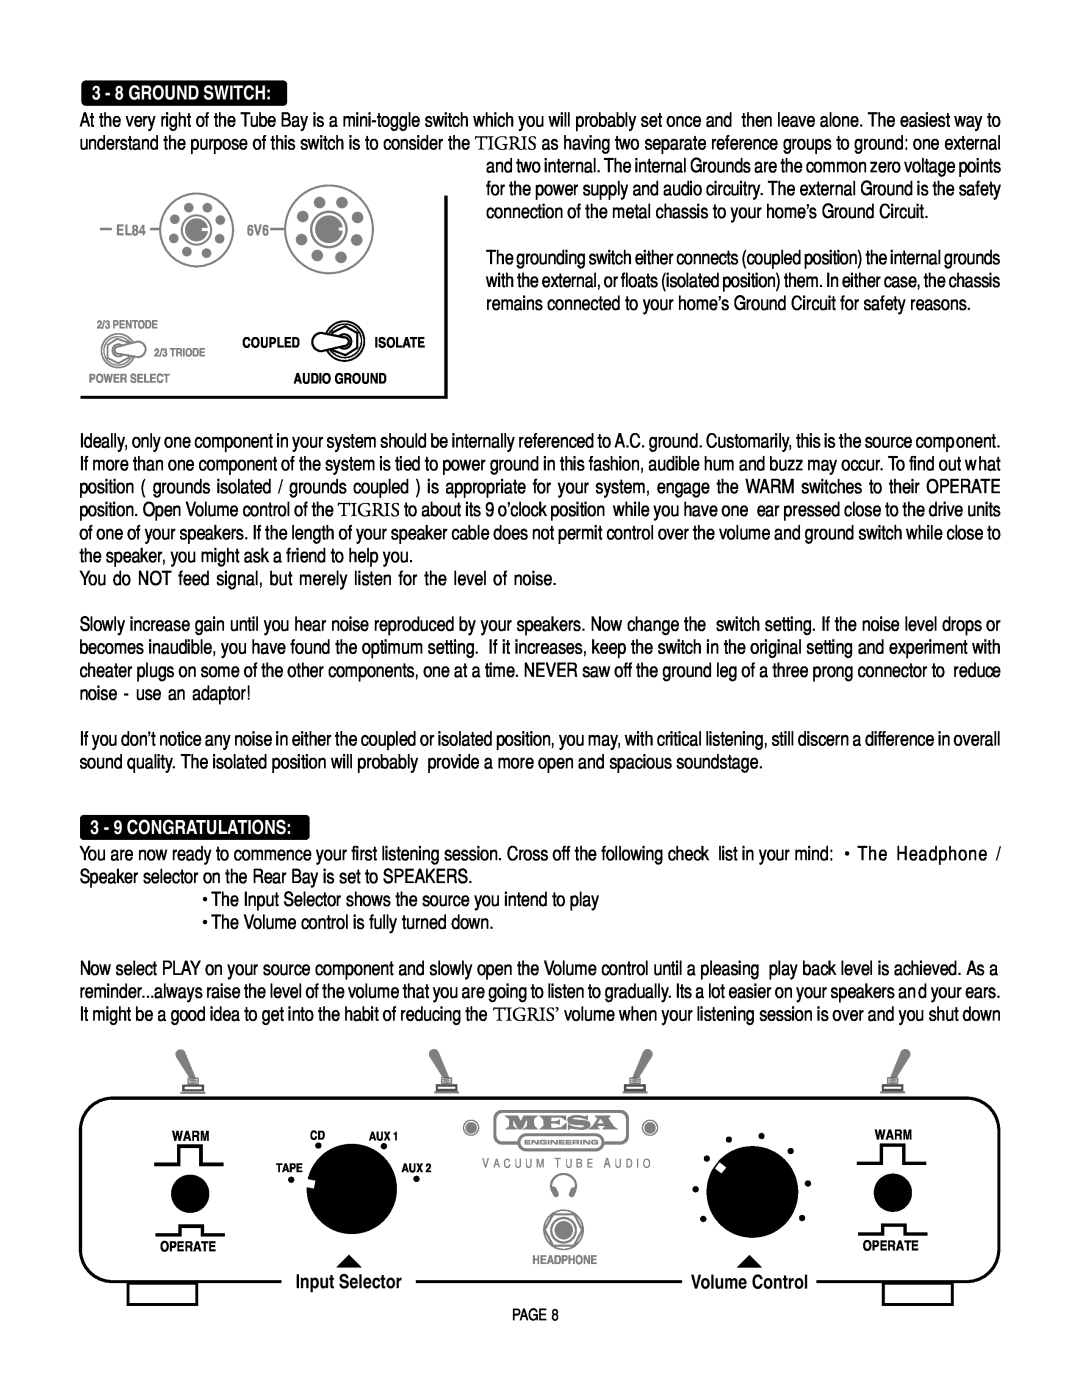 Mesa/Boogie Vacuum Tube Audio owner manual 3 - 8 GROUND SWITCH, 3 - 9 CONGRATULATIONS, Volume Control 